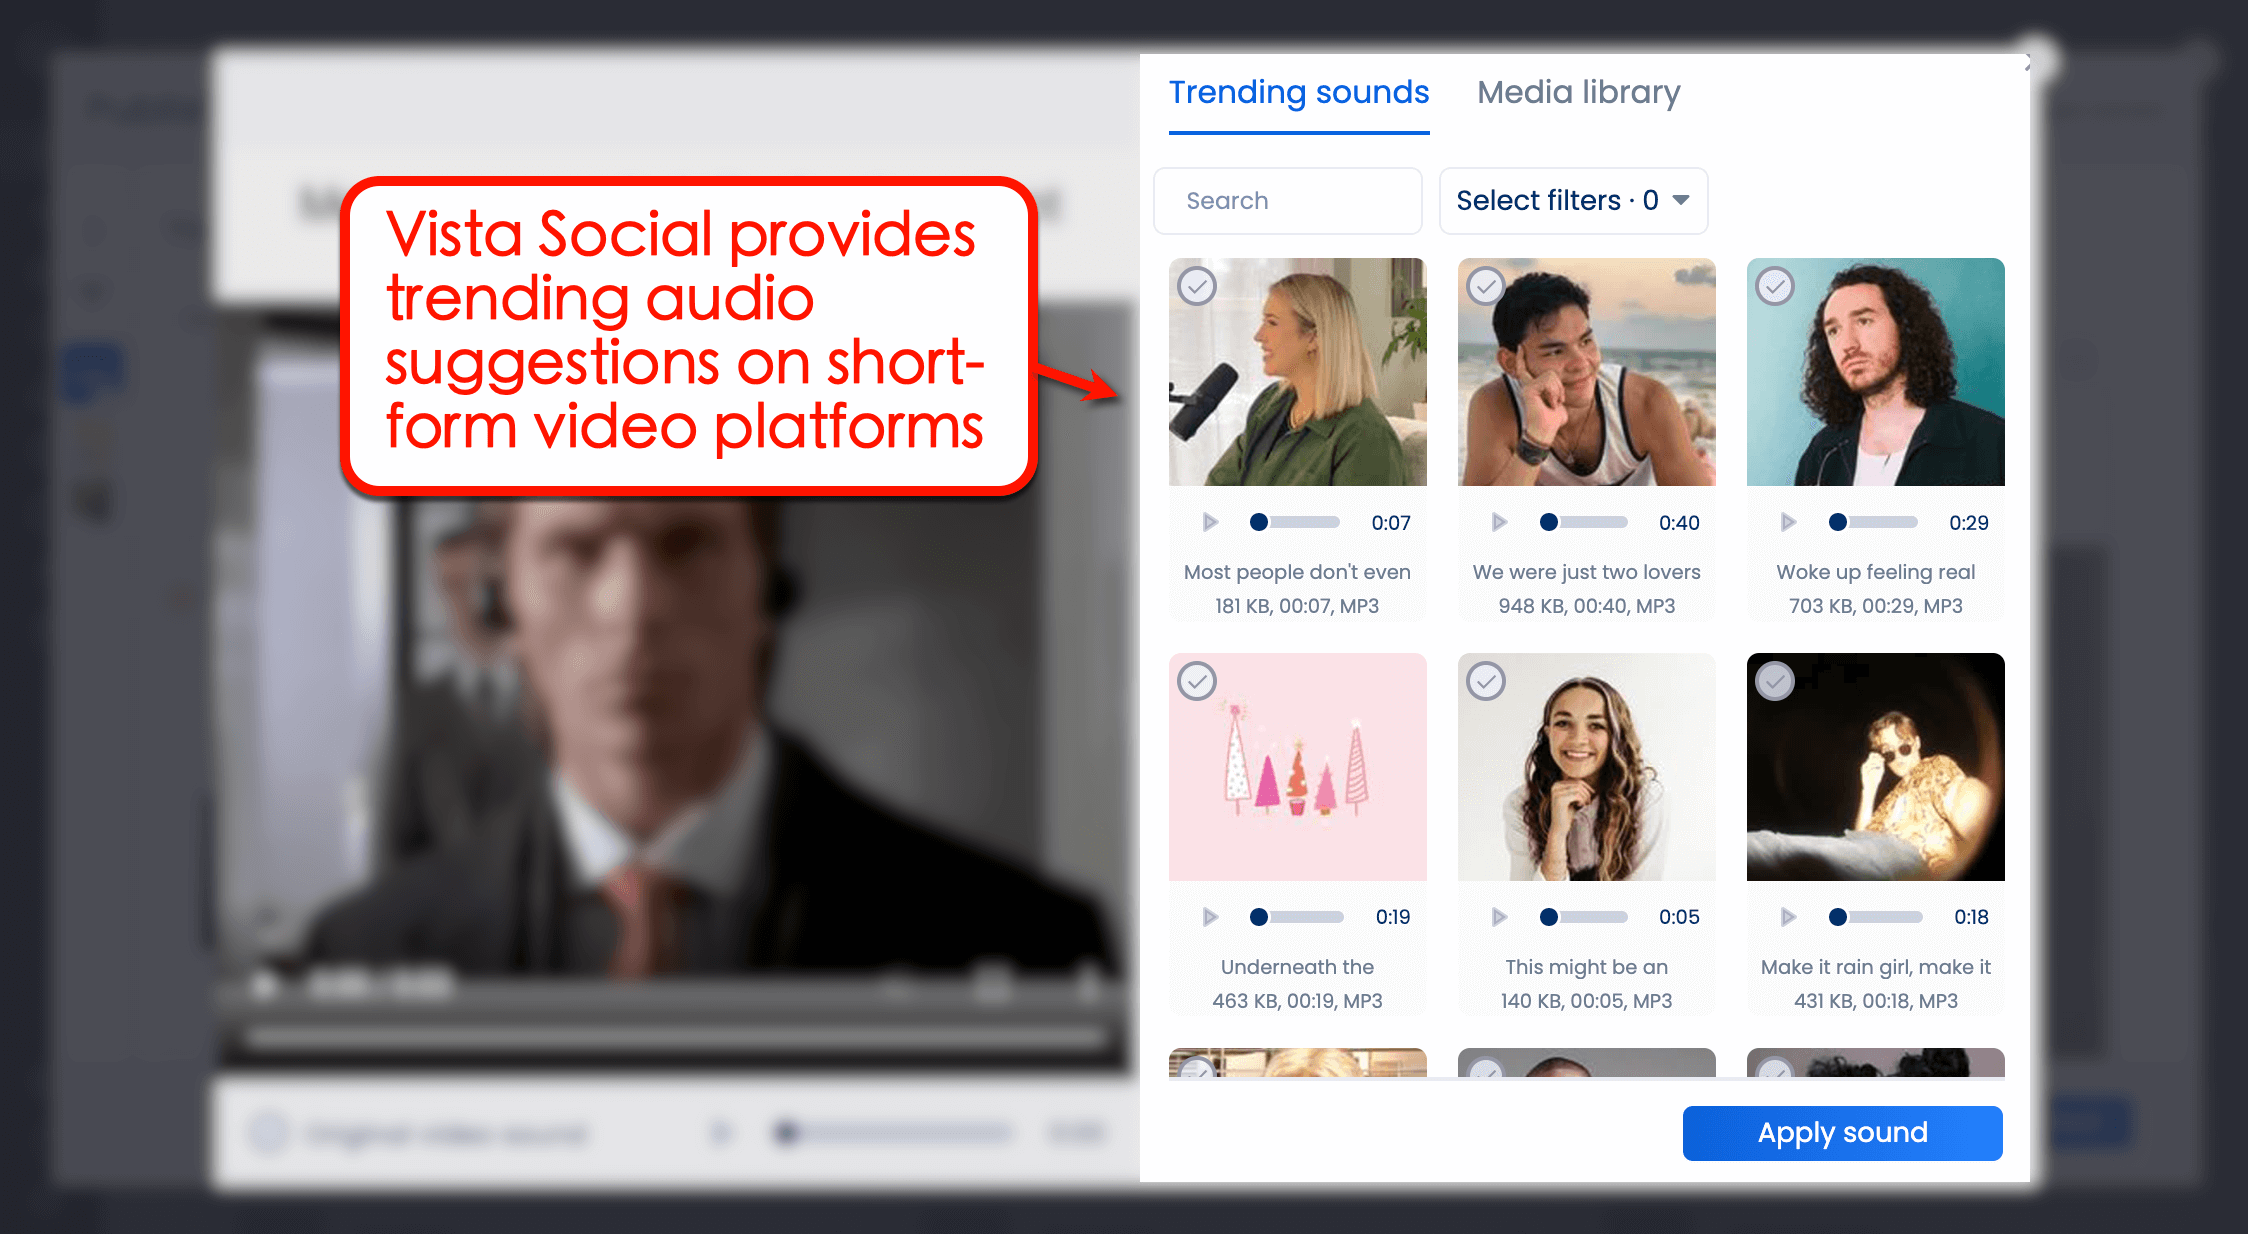 Vista Social provides trending audio suggestions